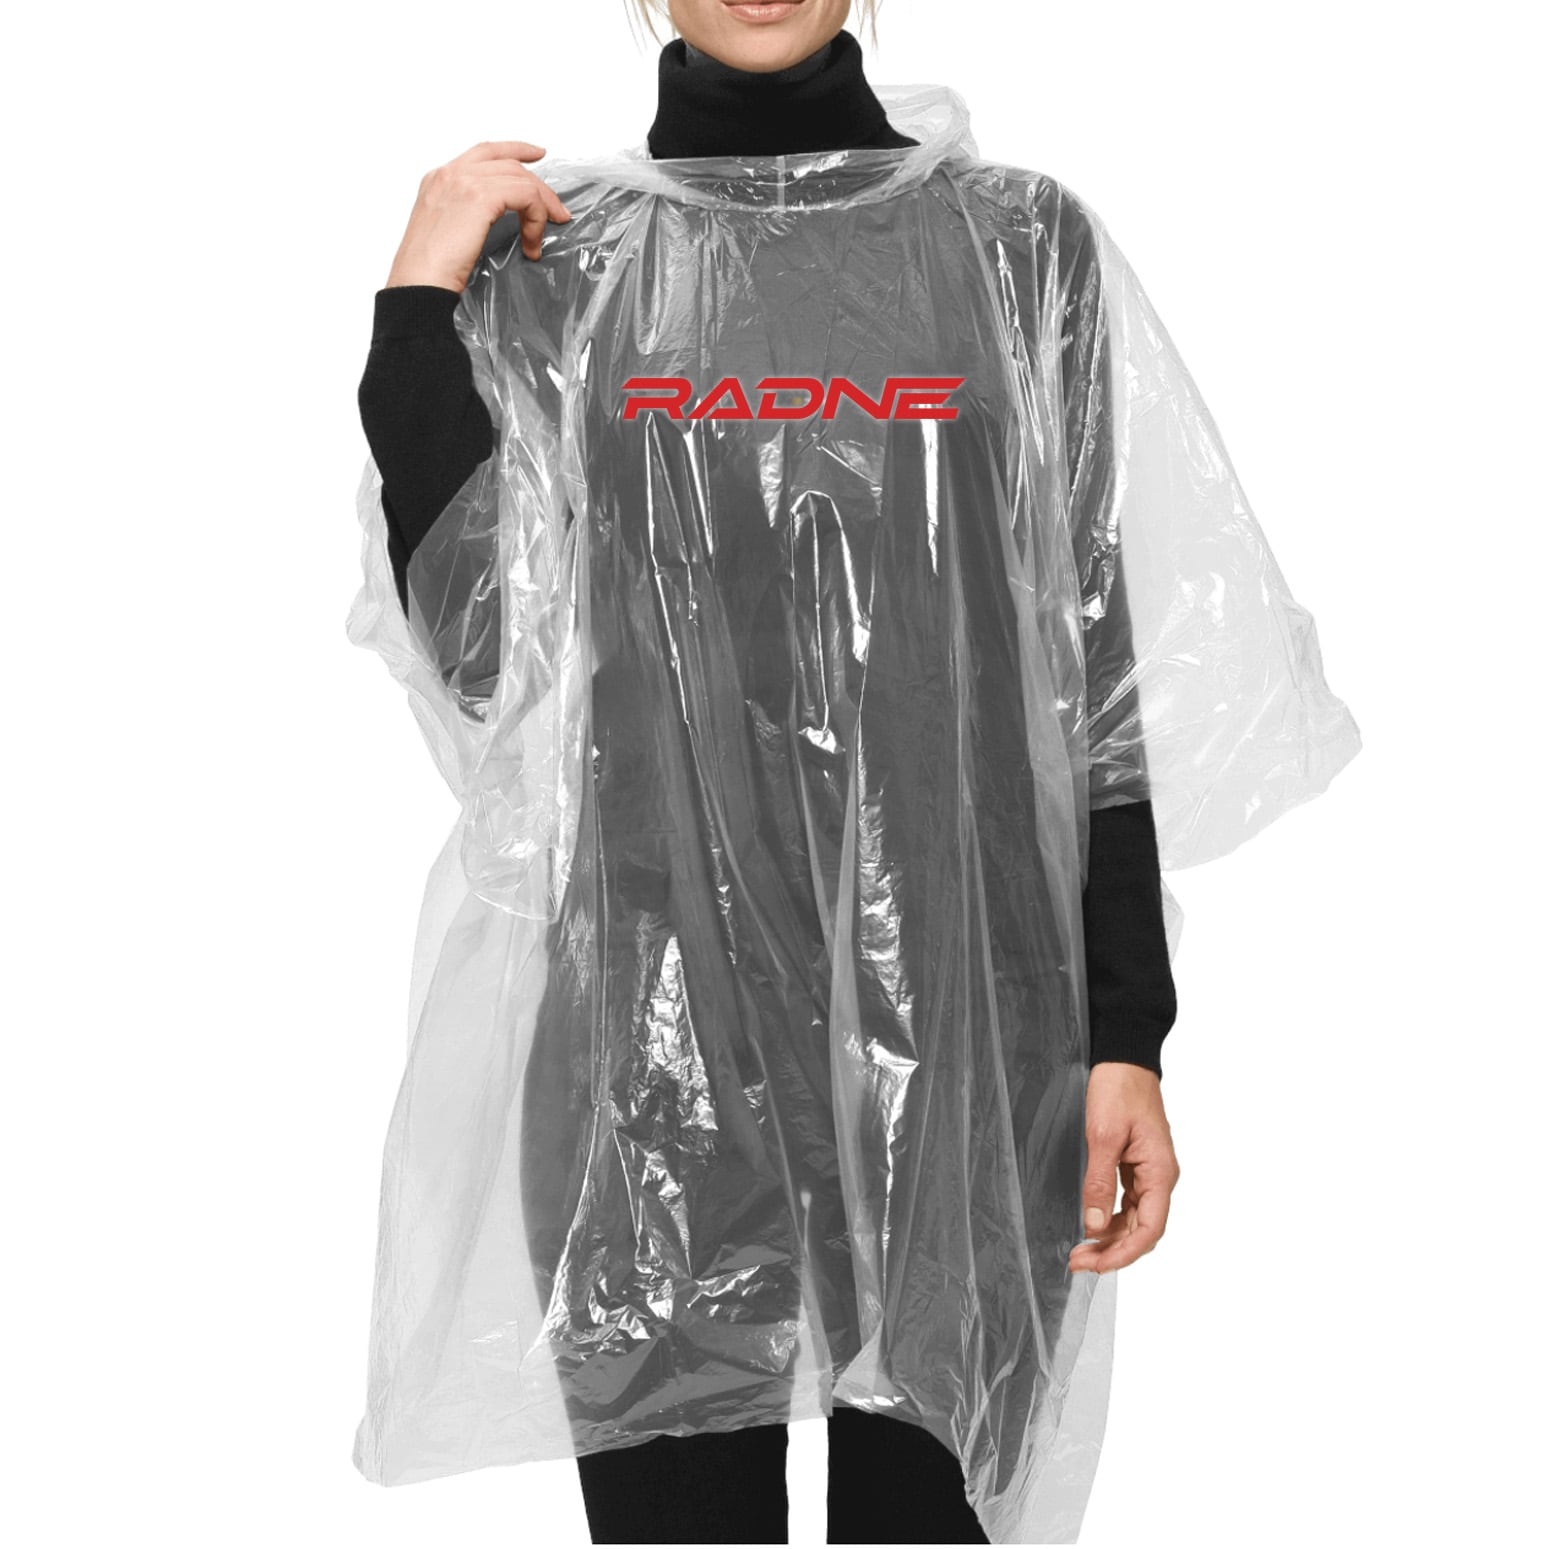 5-pack Rain poncho with Radne print